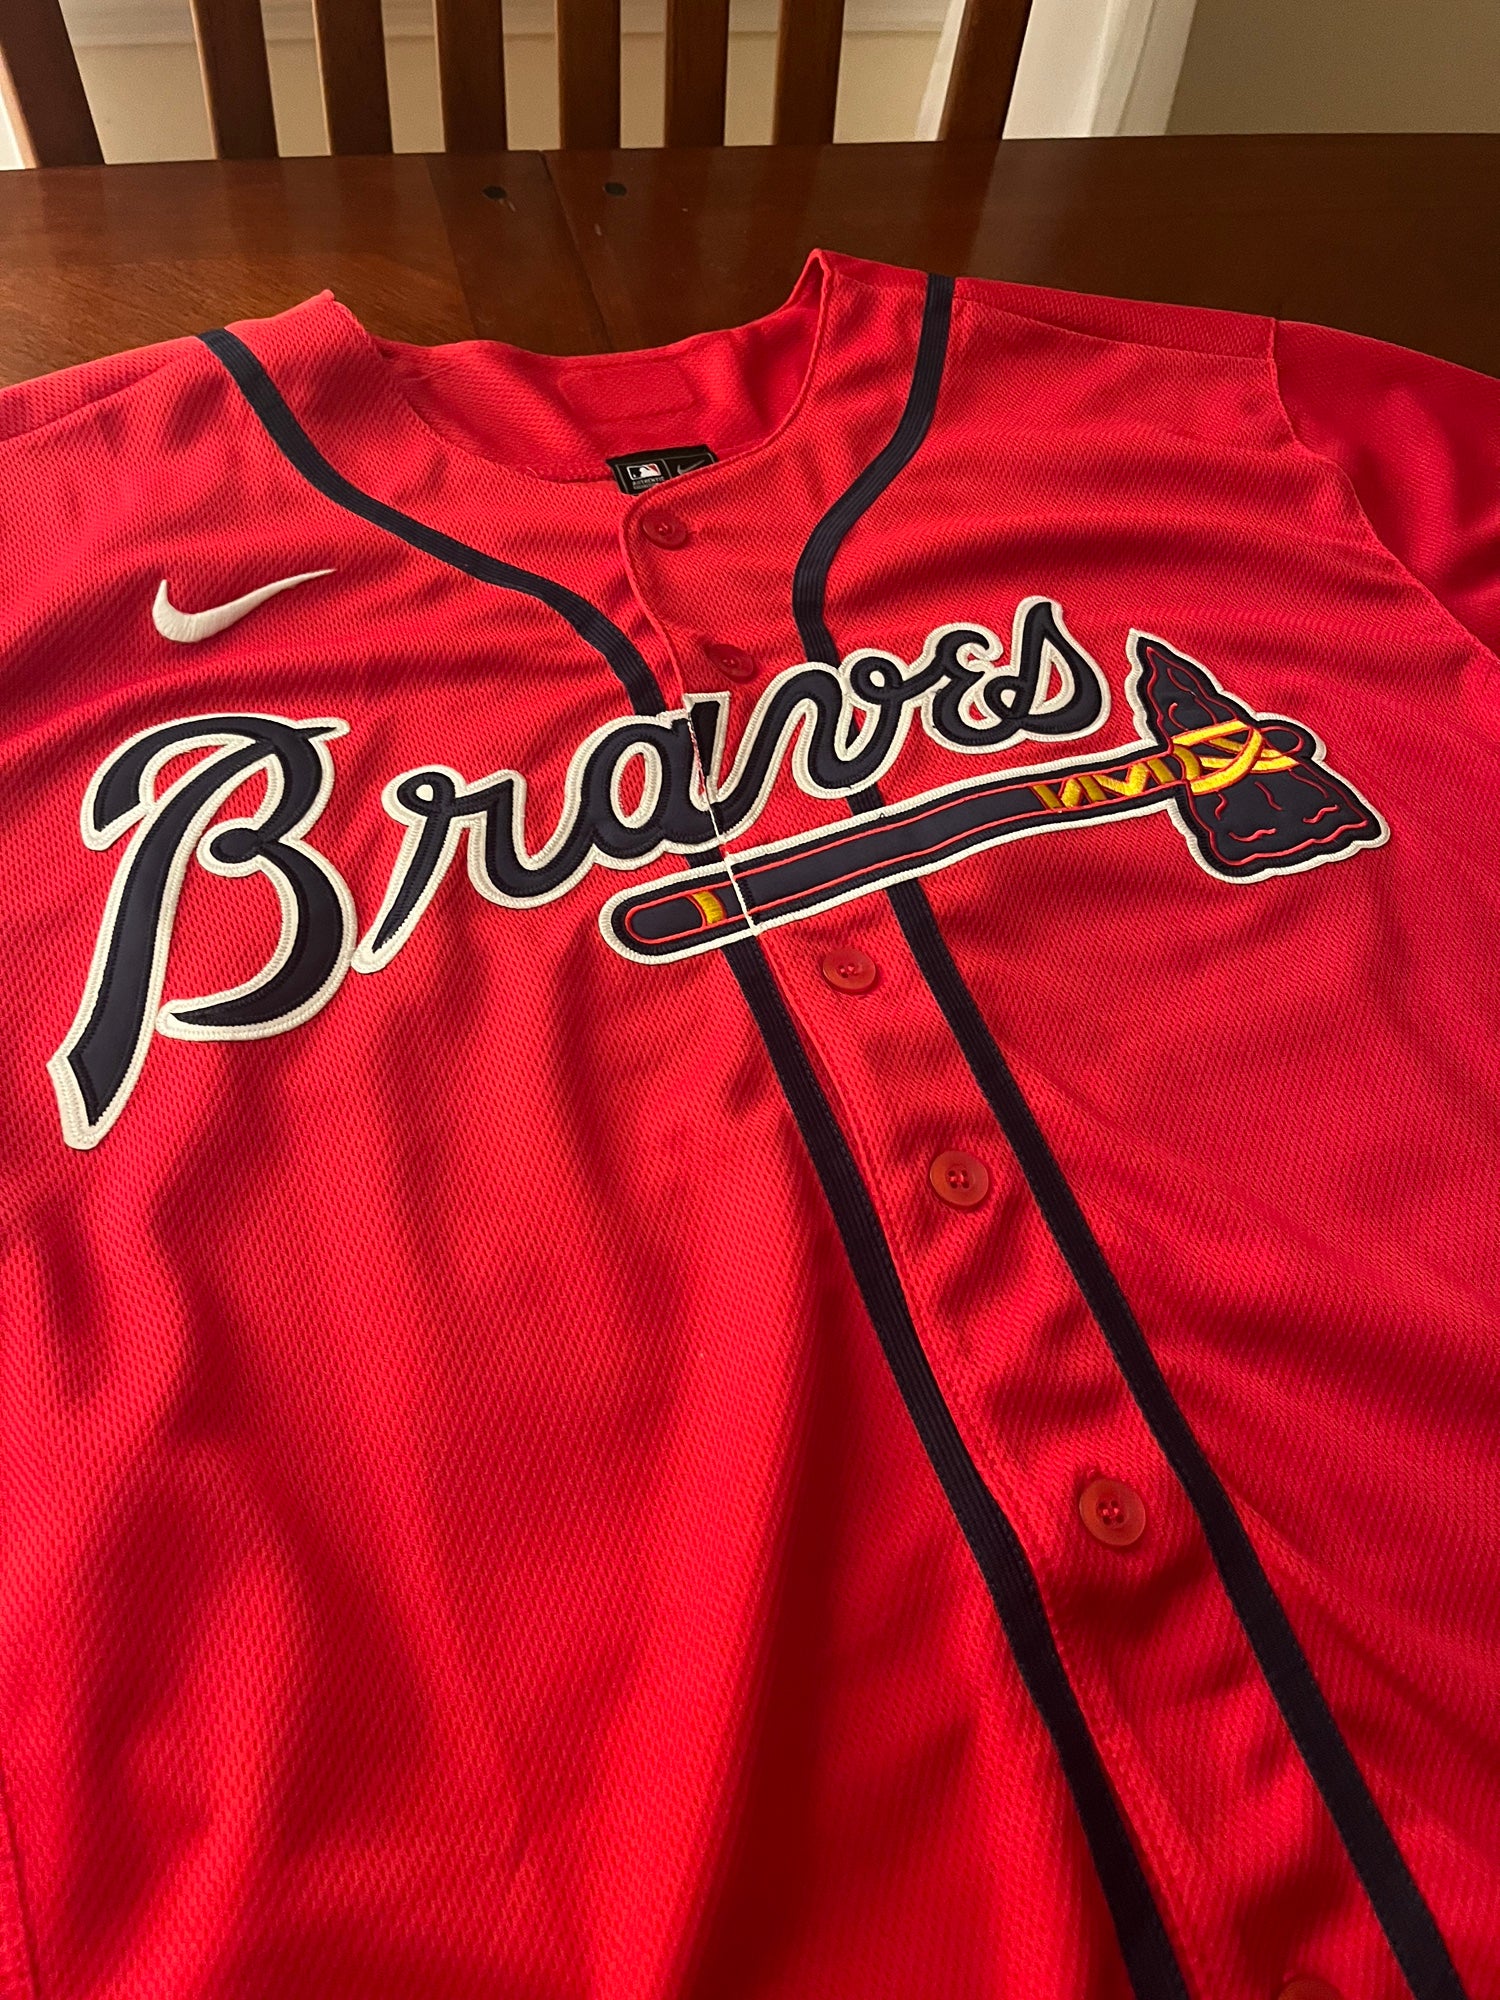 Matt Olson Nike Red Braves Jersey - XL